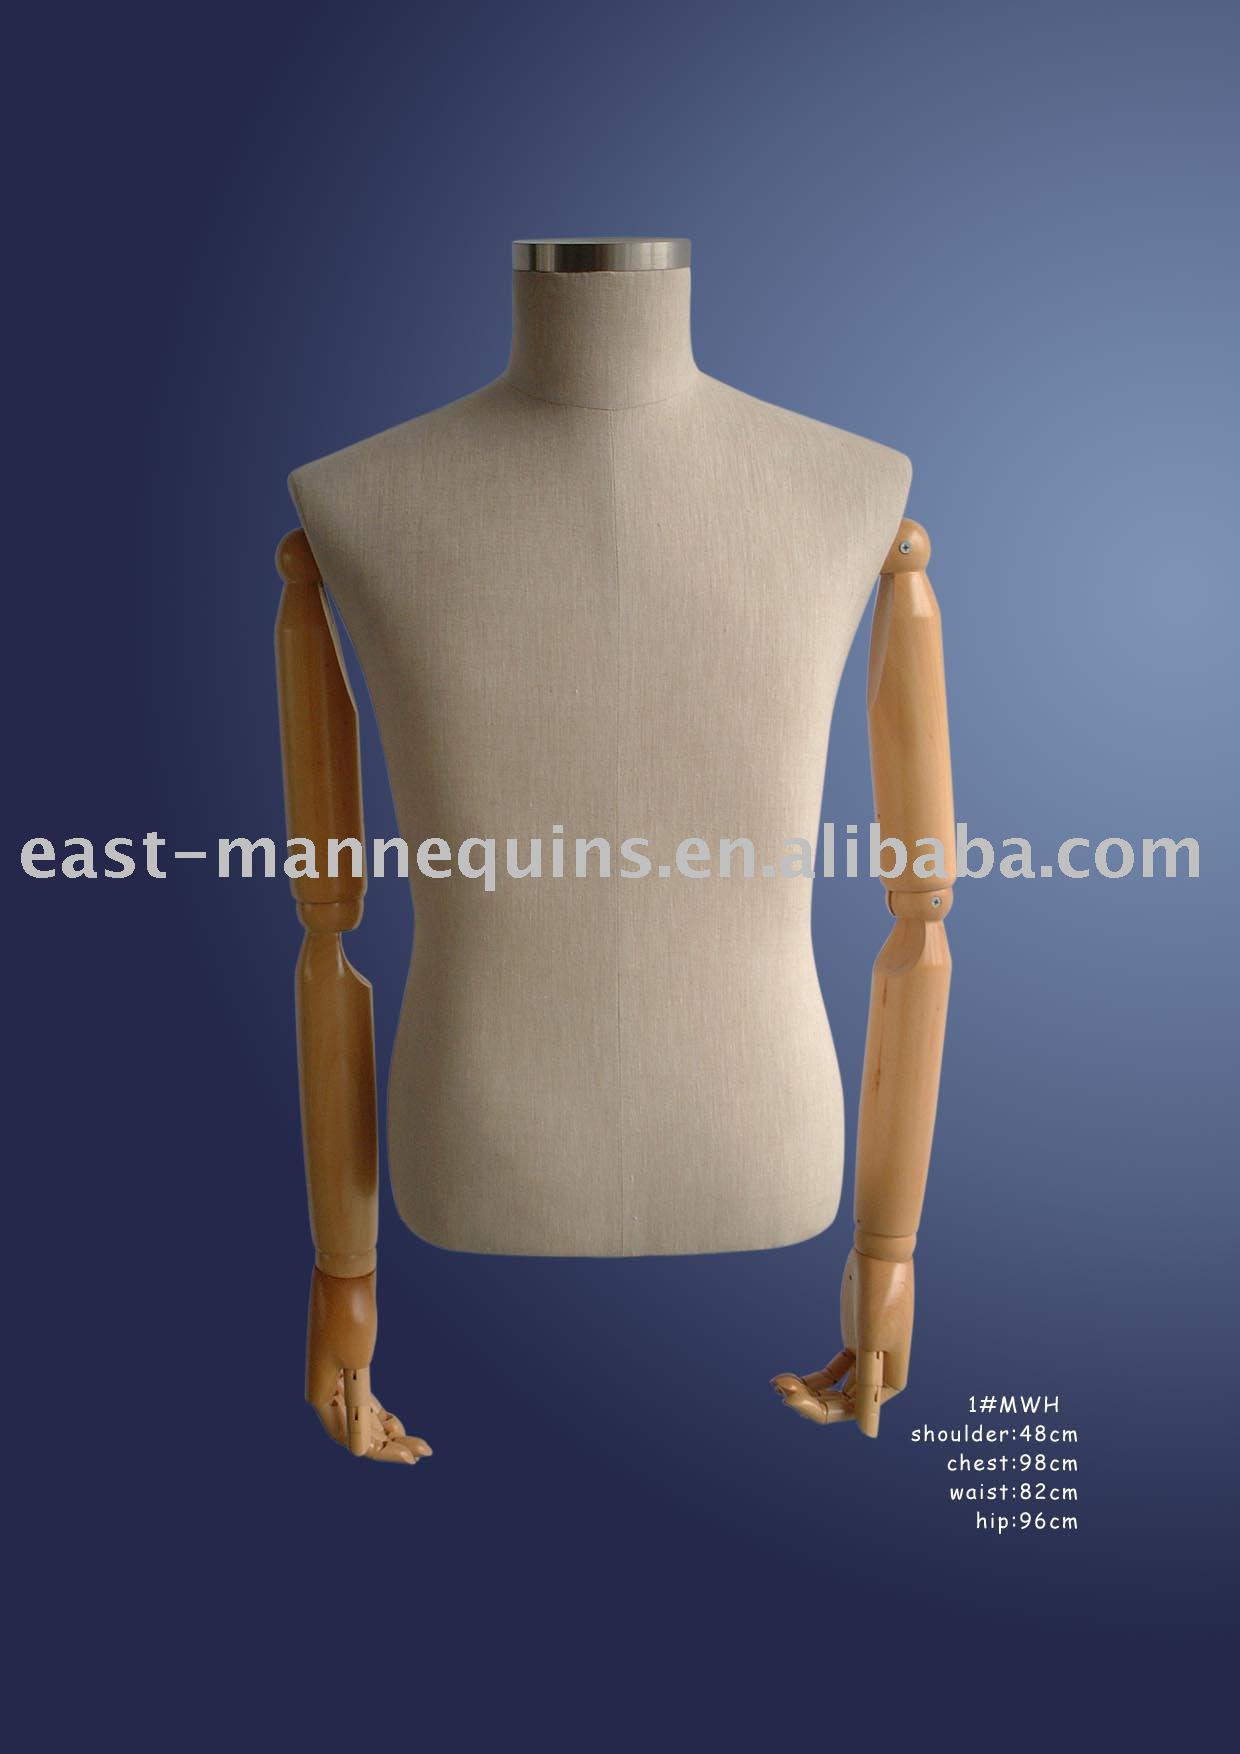 male torso mannequin